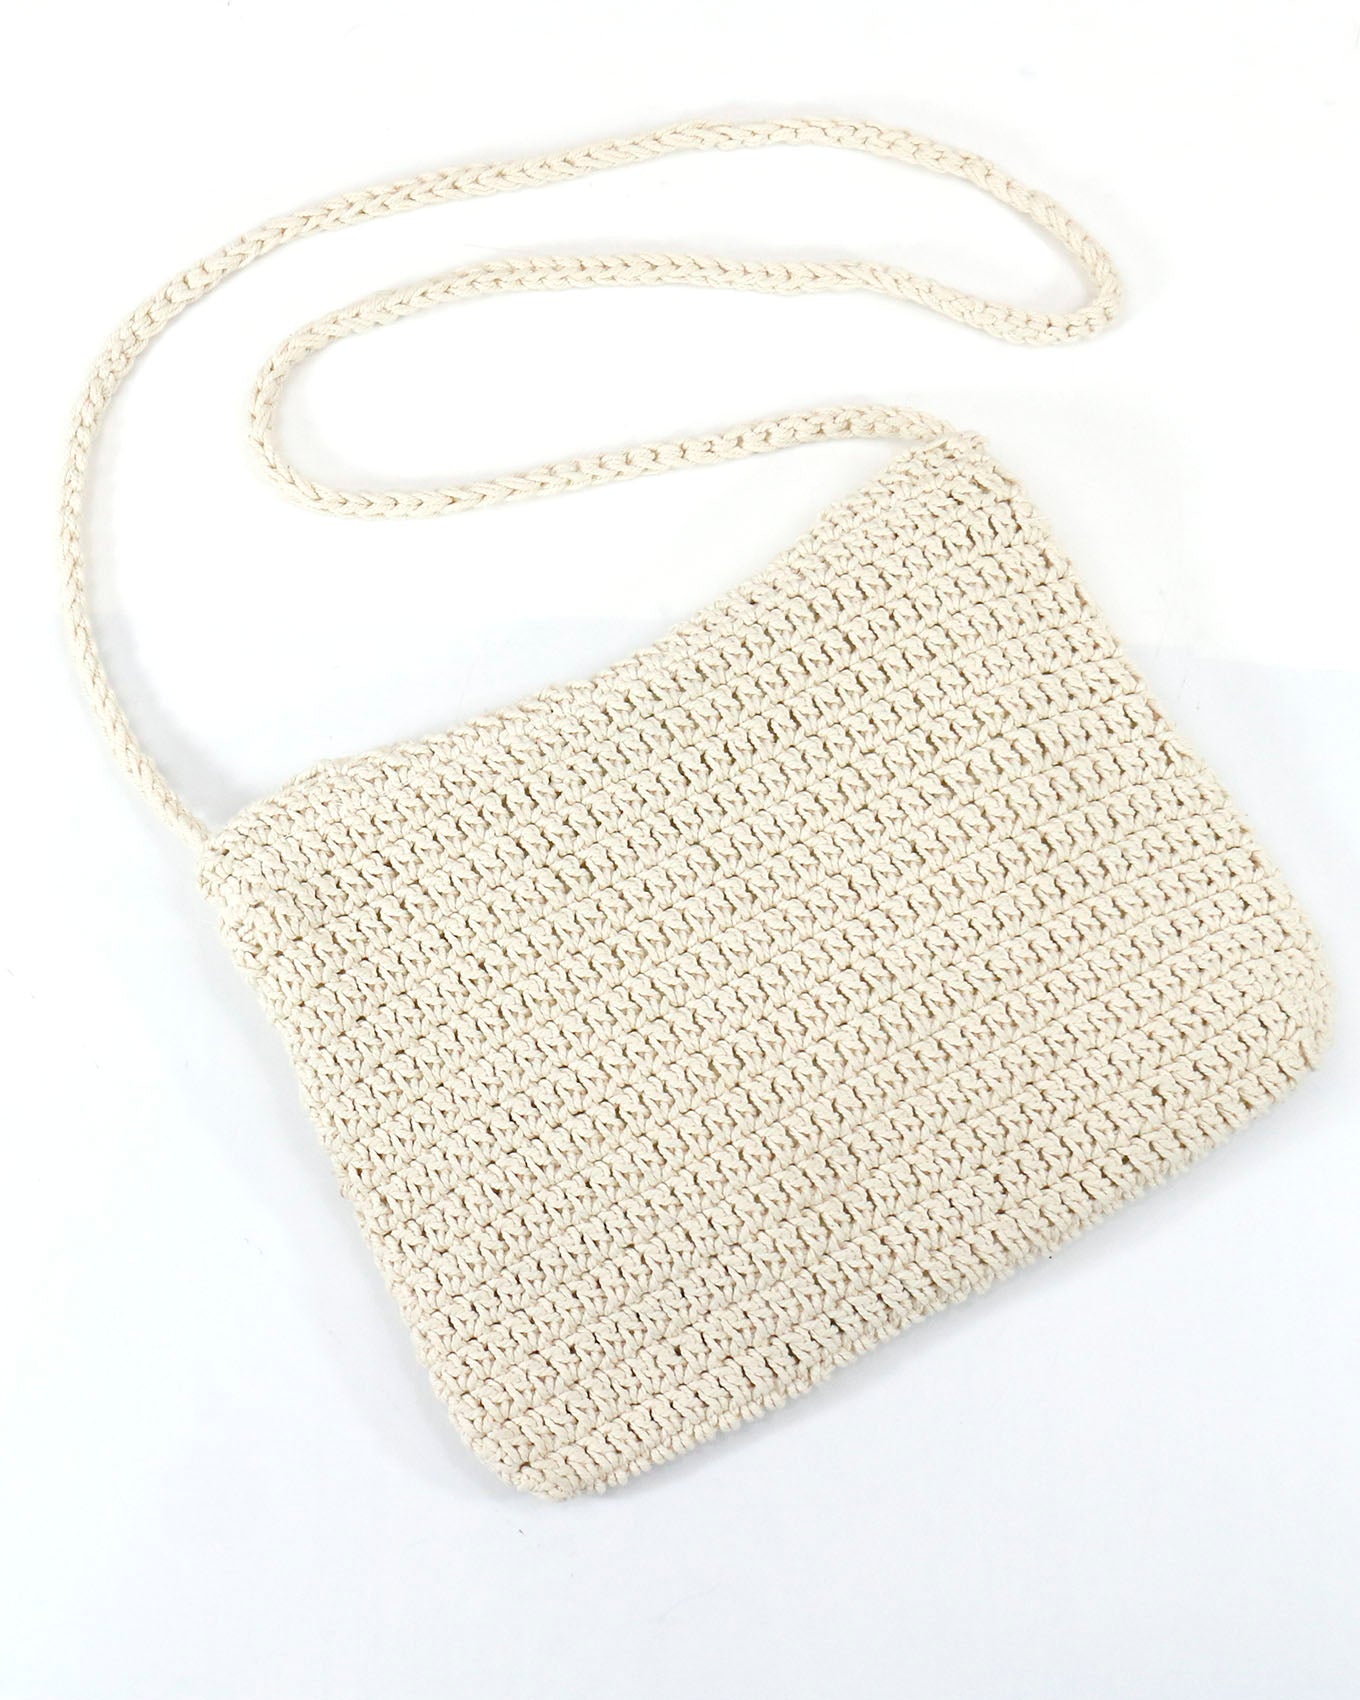 Back view of crochet crossbody bag